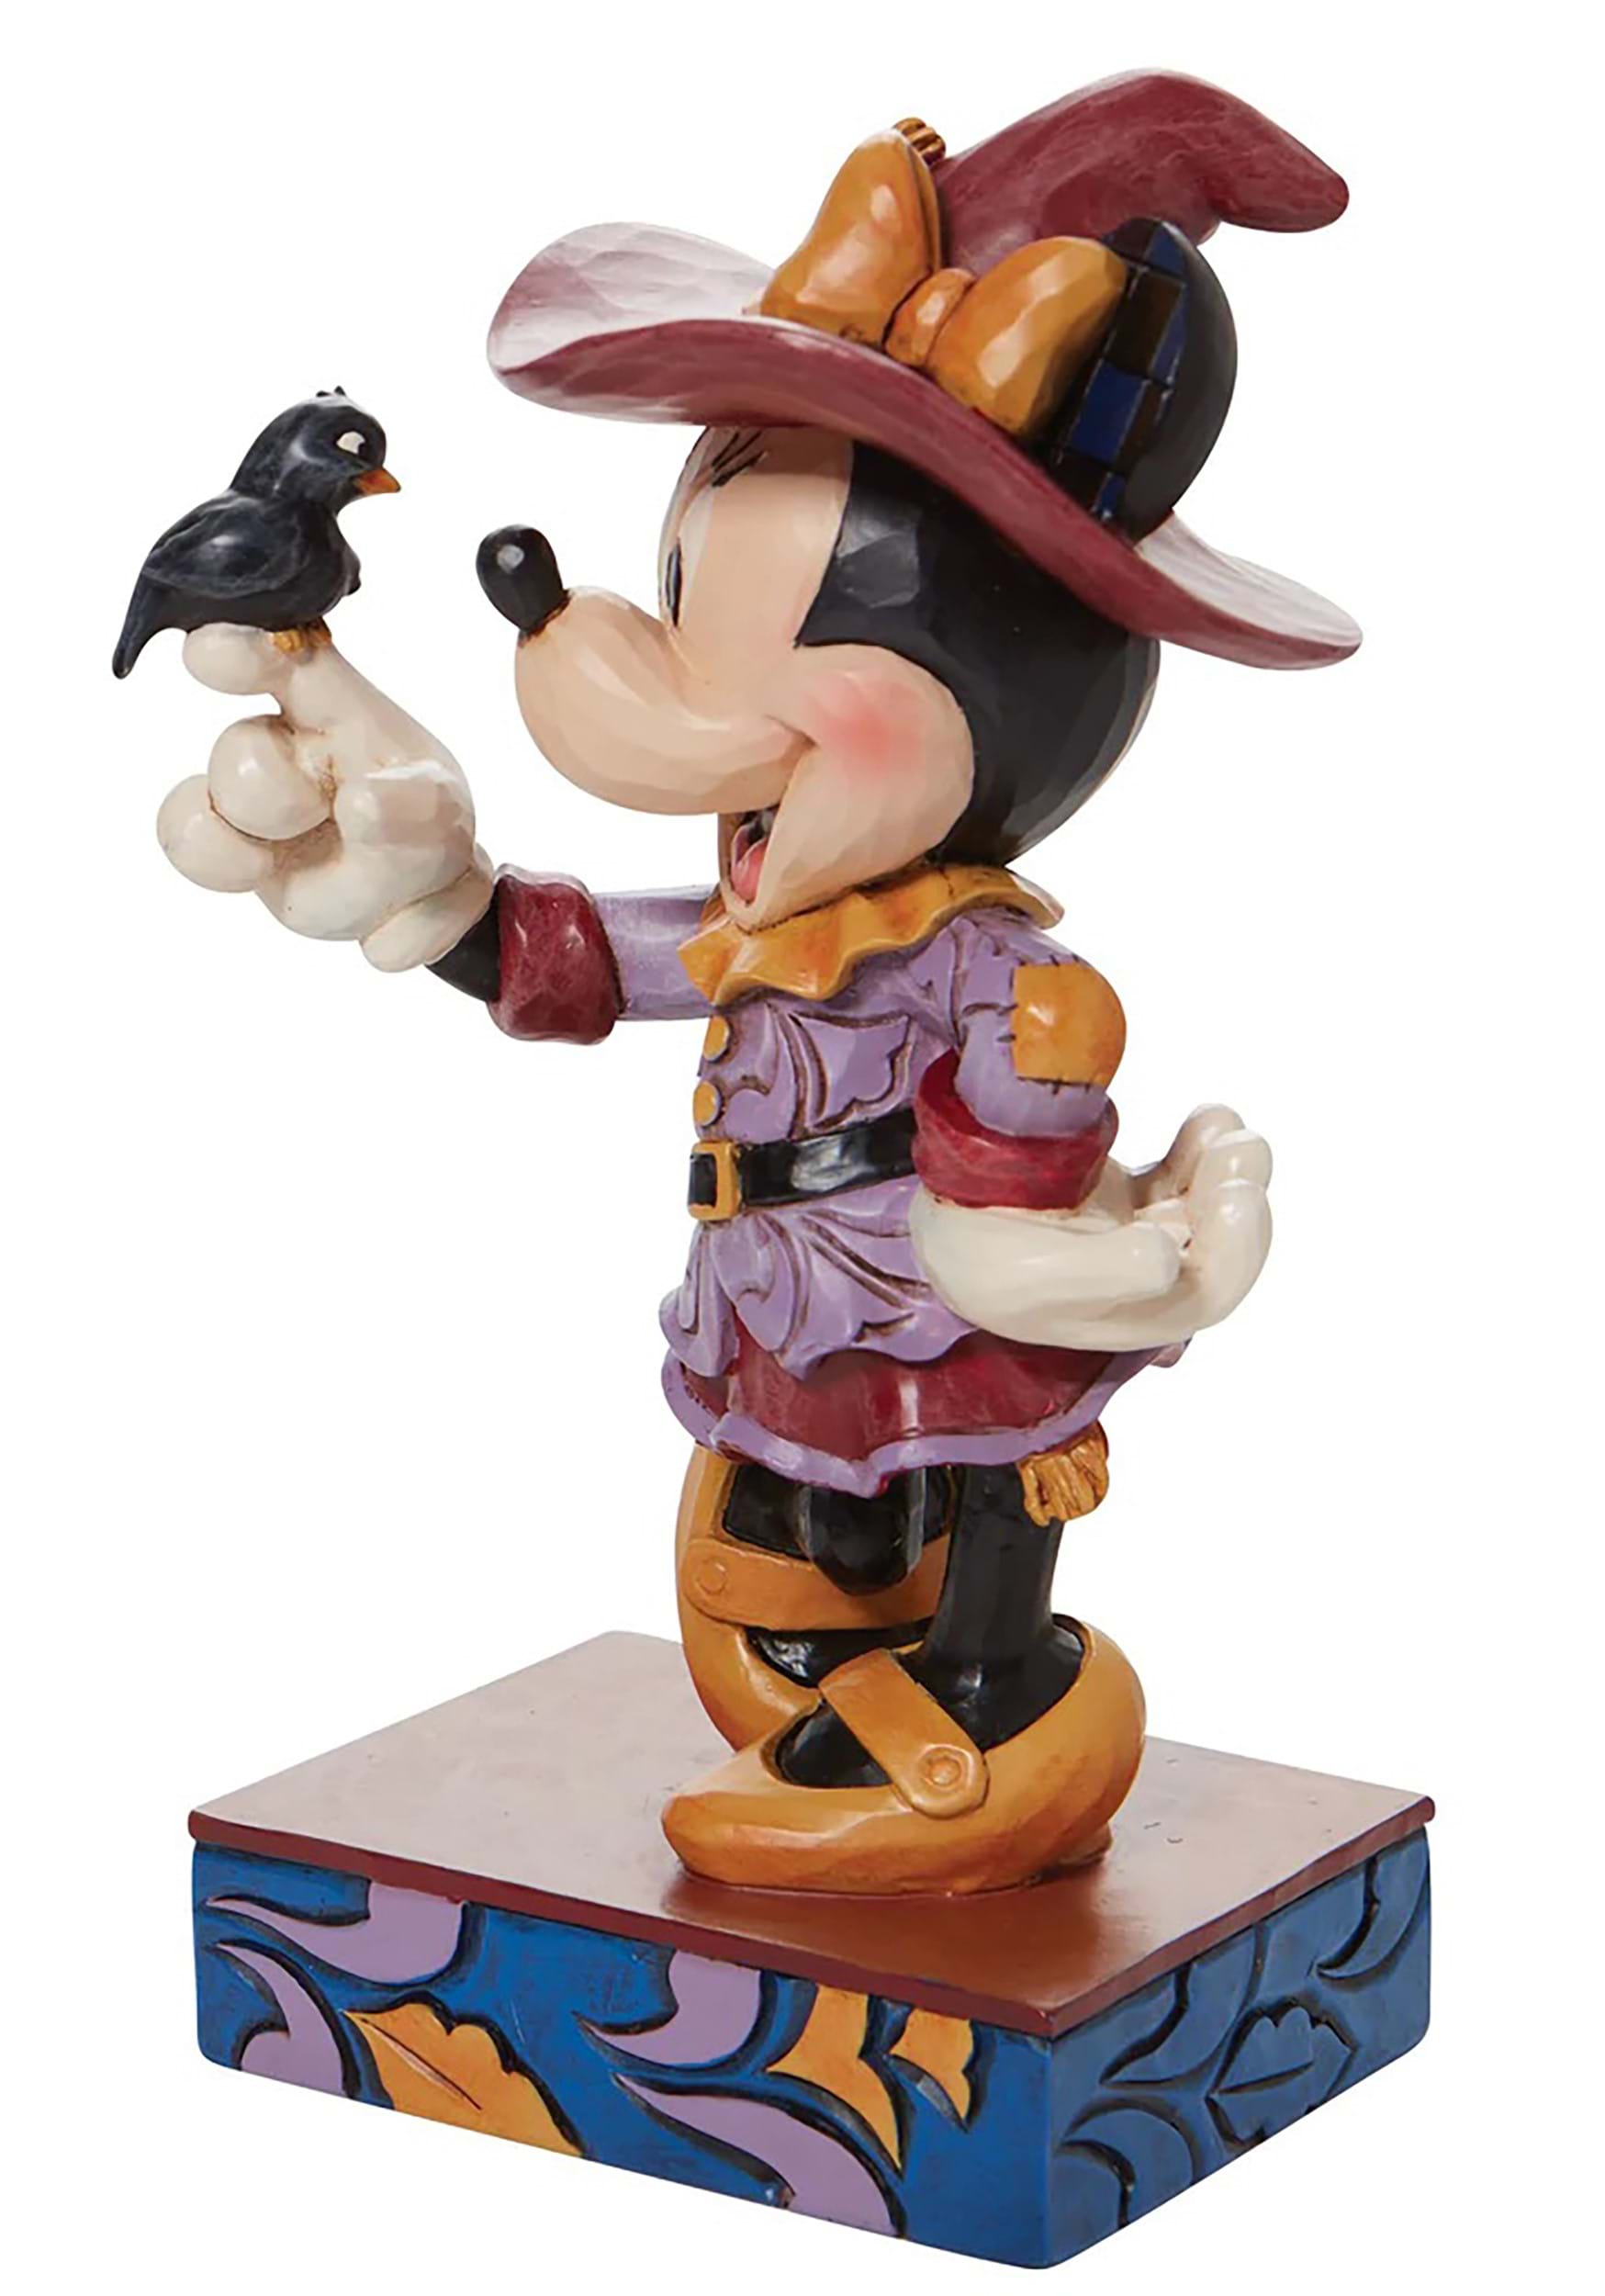 Disney Traditions Mickey & Minnie Santas Figurine by Jim Shore